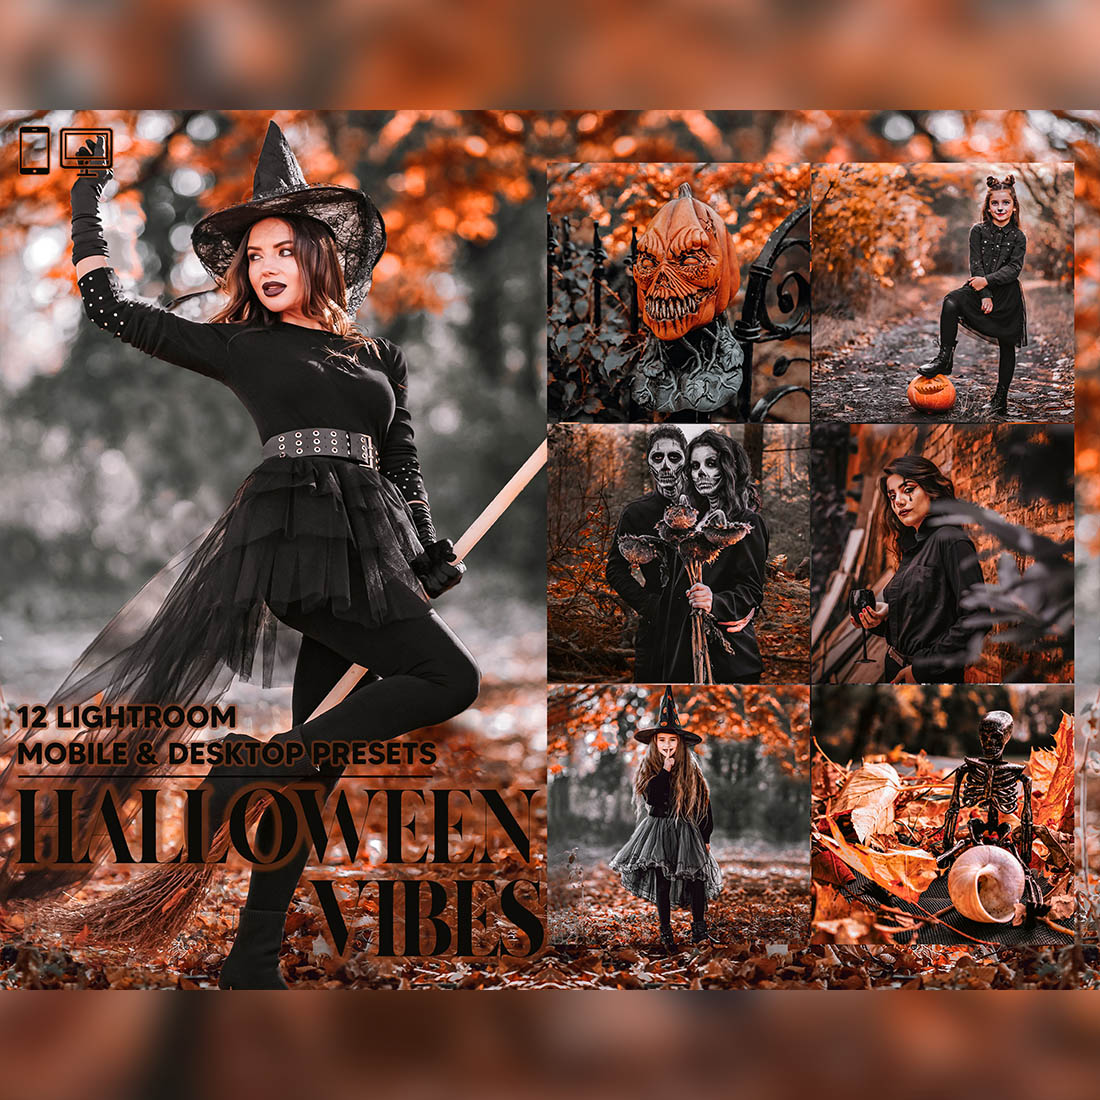 12 Halloween Vibes Lightroom Presets, Autumn Moody Mobile Preset, Black & Orange Desktop, Lifestyle Portrait Theme Instagram LR Filter DNG cover image.